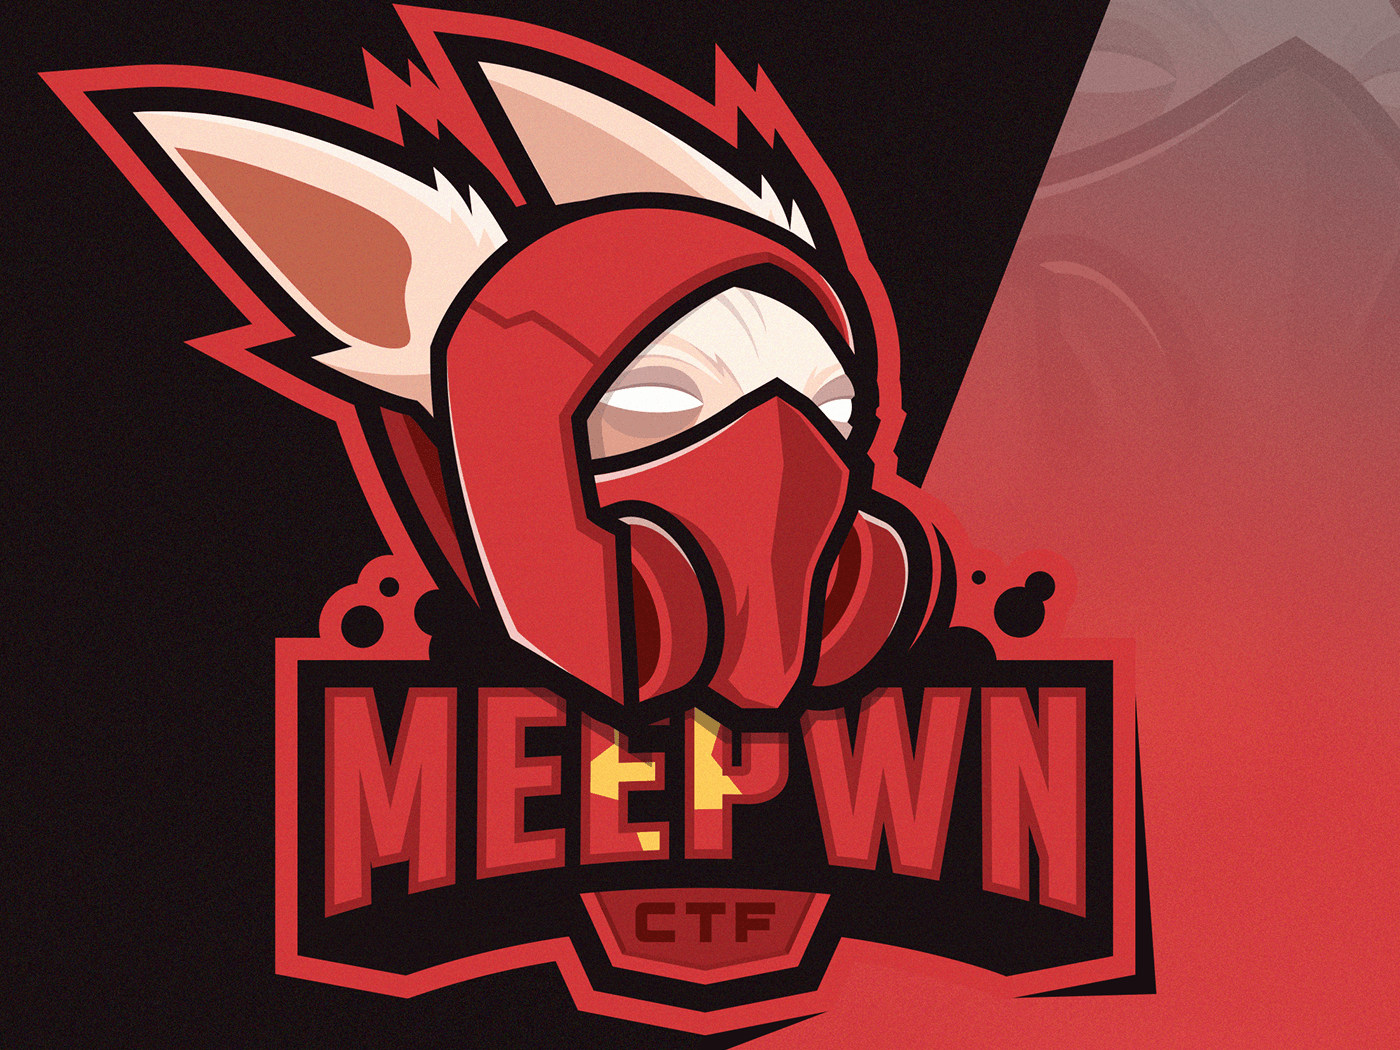 CTF Logo - Meepwn CTF mascot logo by FlowBackward on Dribbble